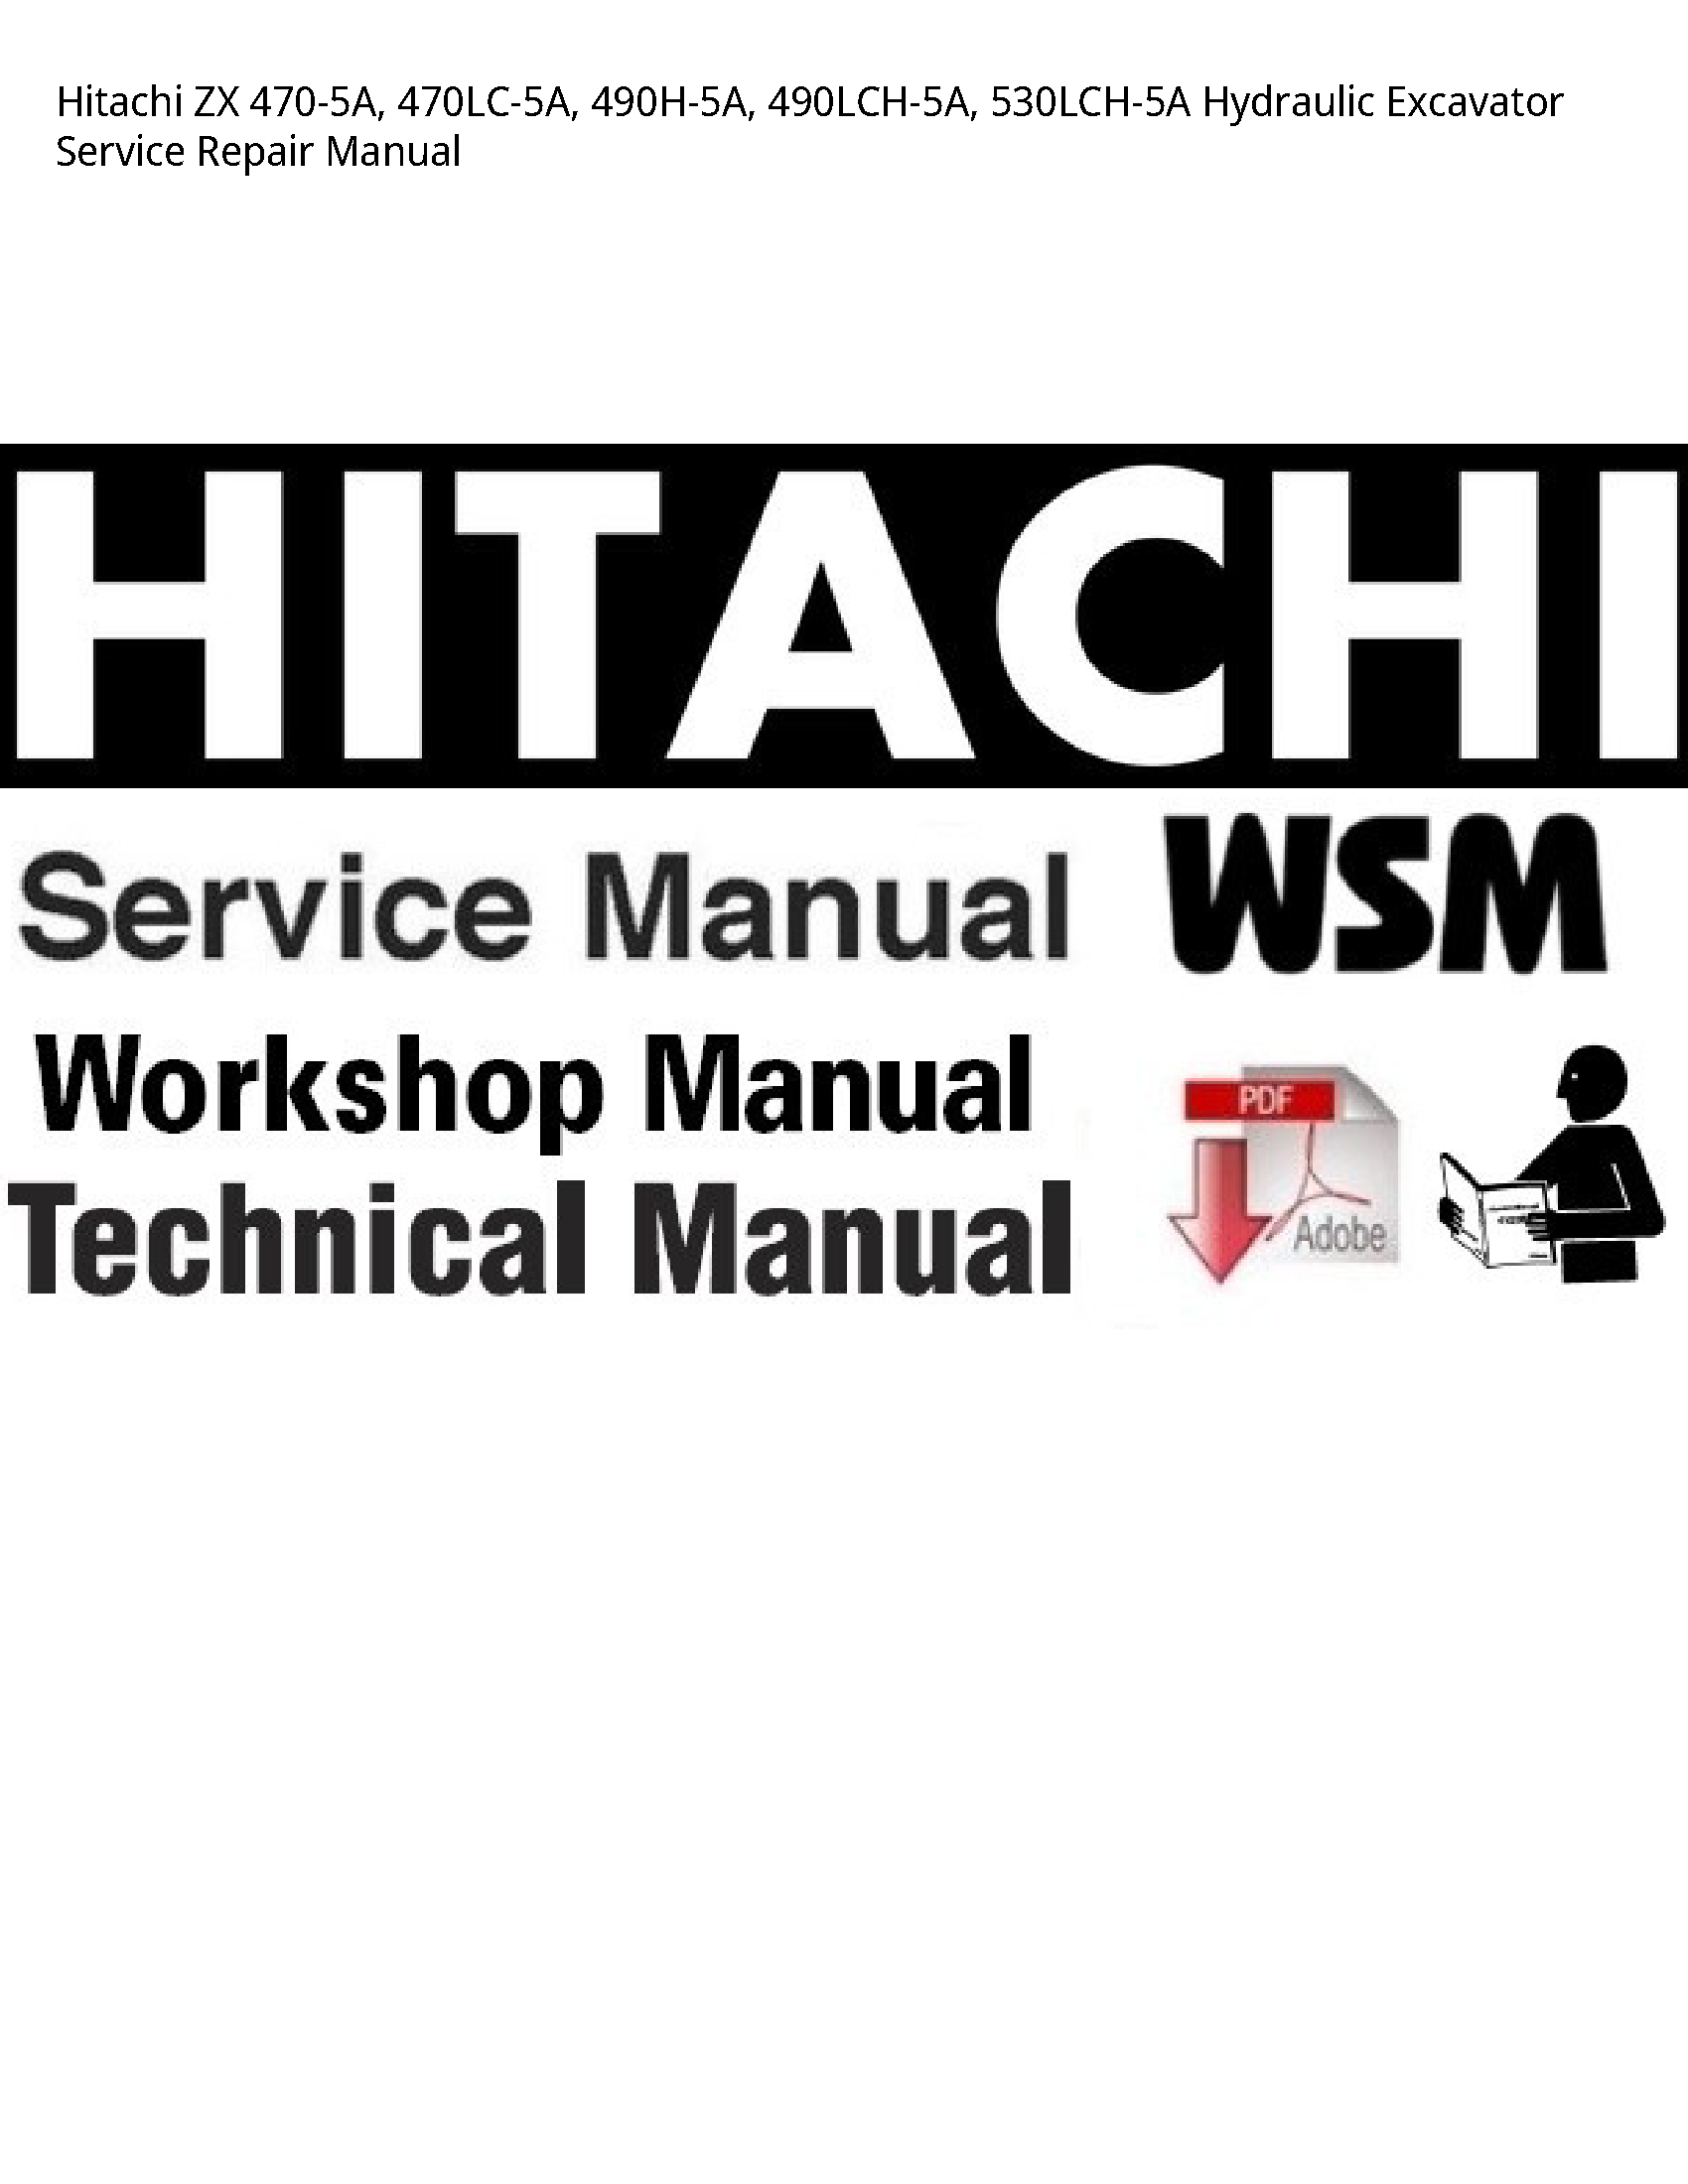 Hitachi 470-5A ZX Hydraulic Excavator manual